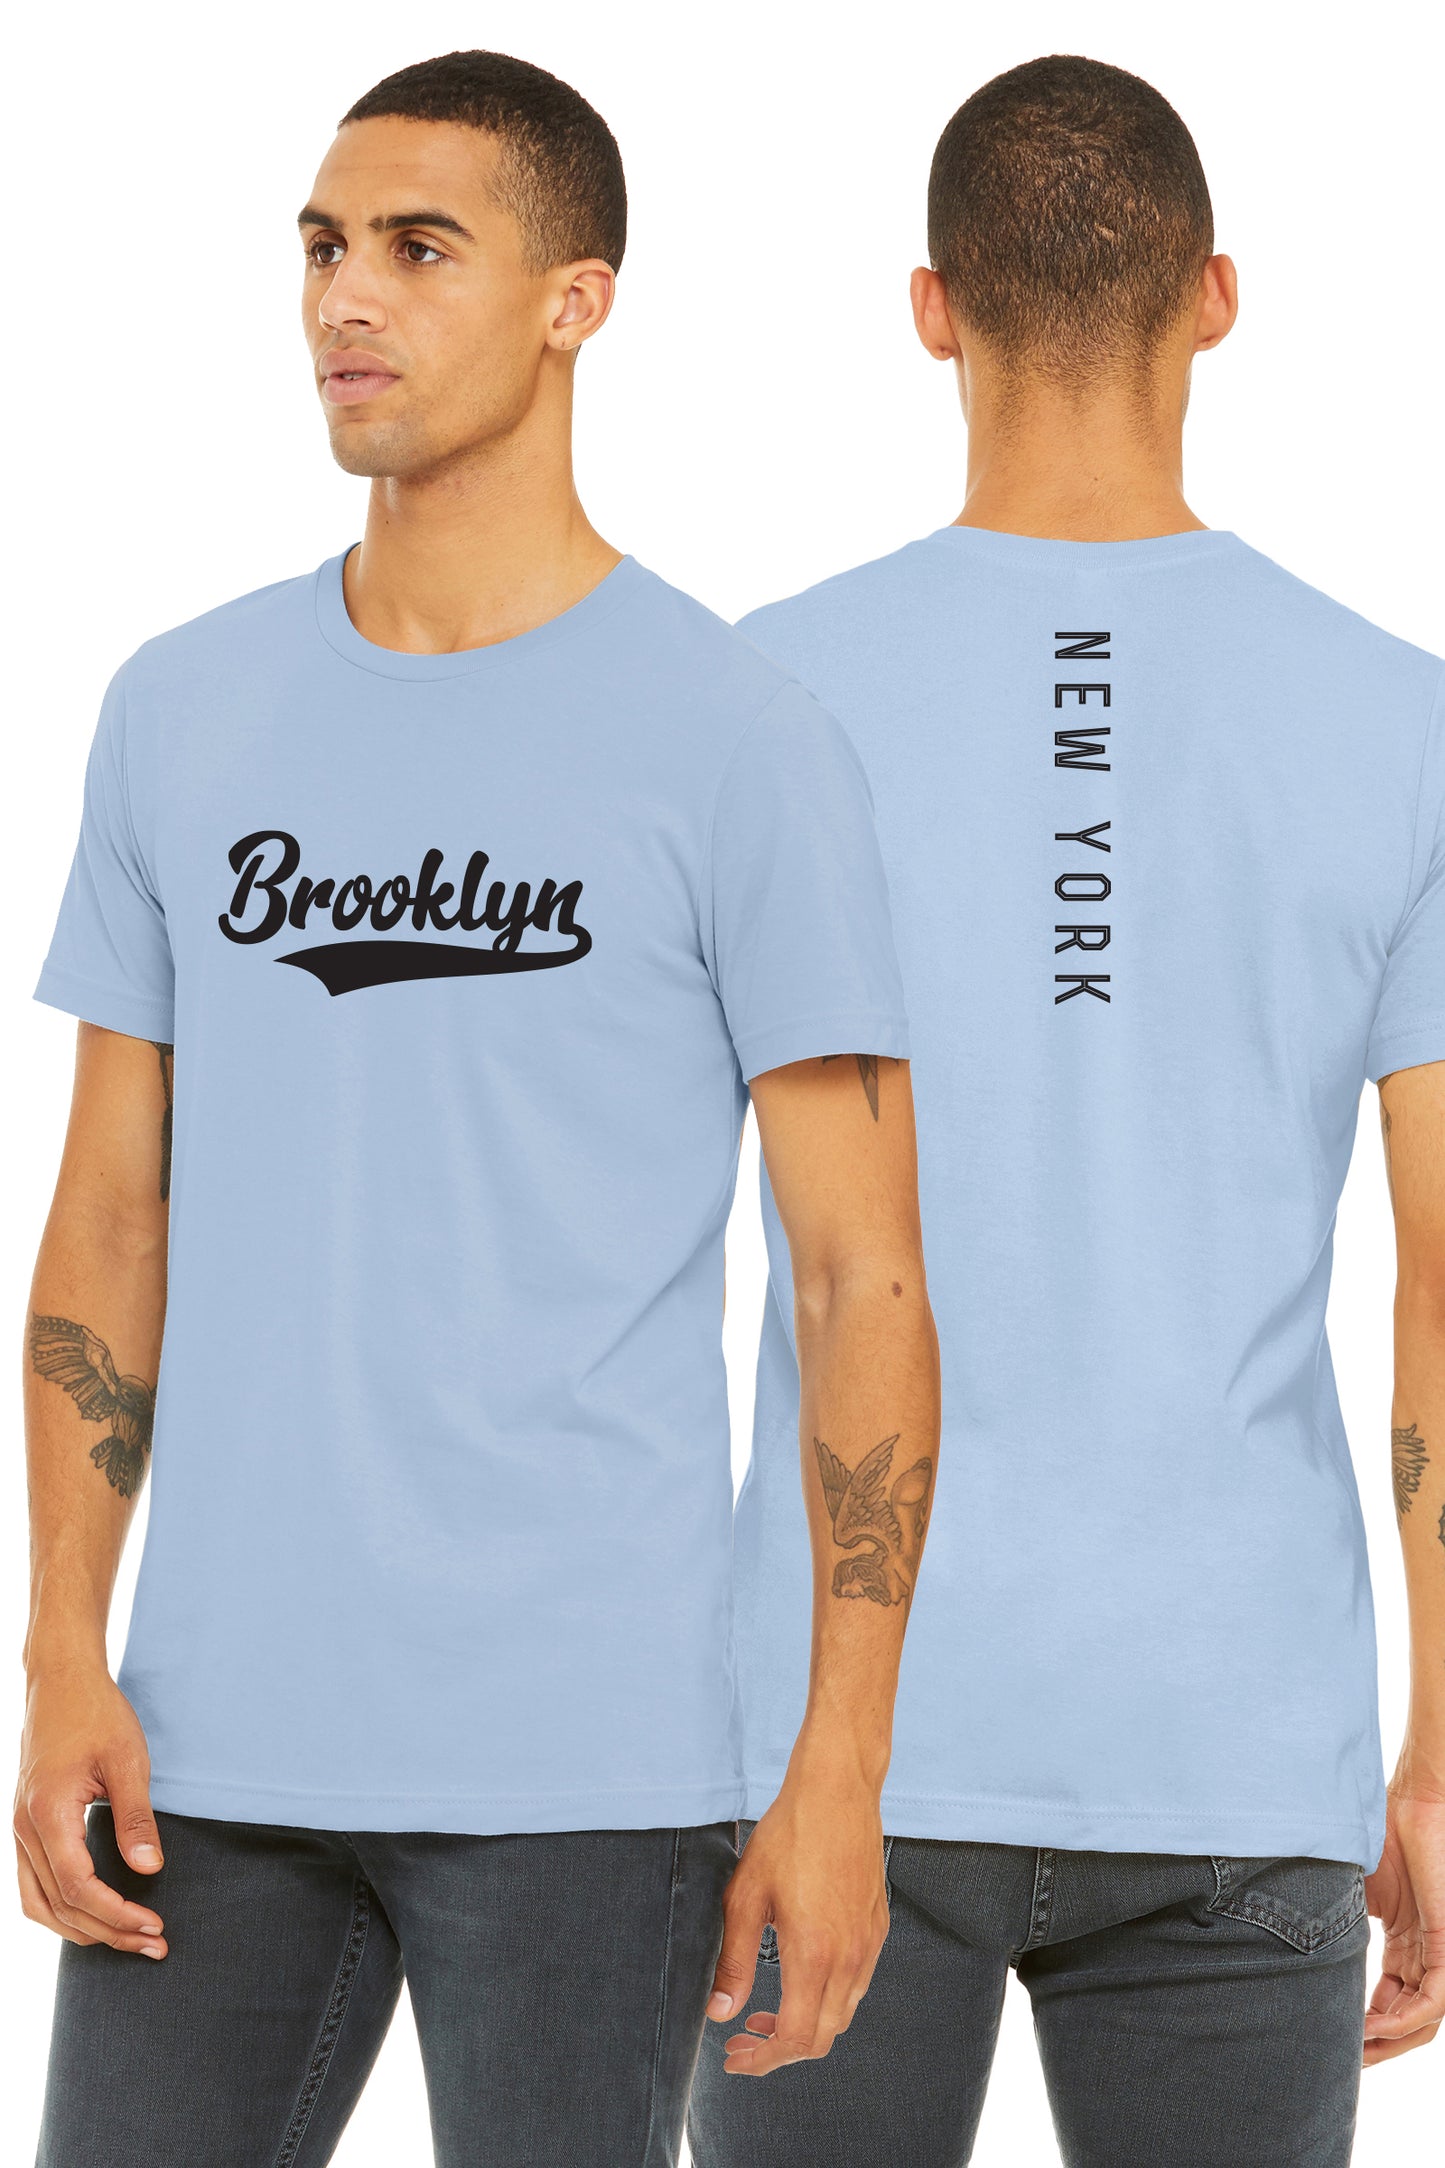 Daxton Adult Unisex Tshirt  Brooklyn Script with New York Vertical on the Back